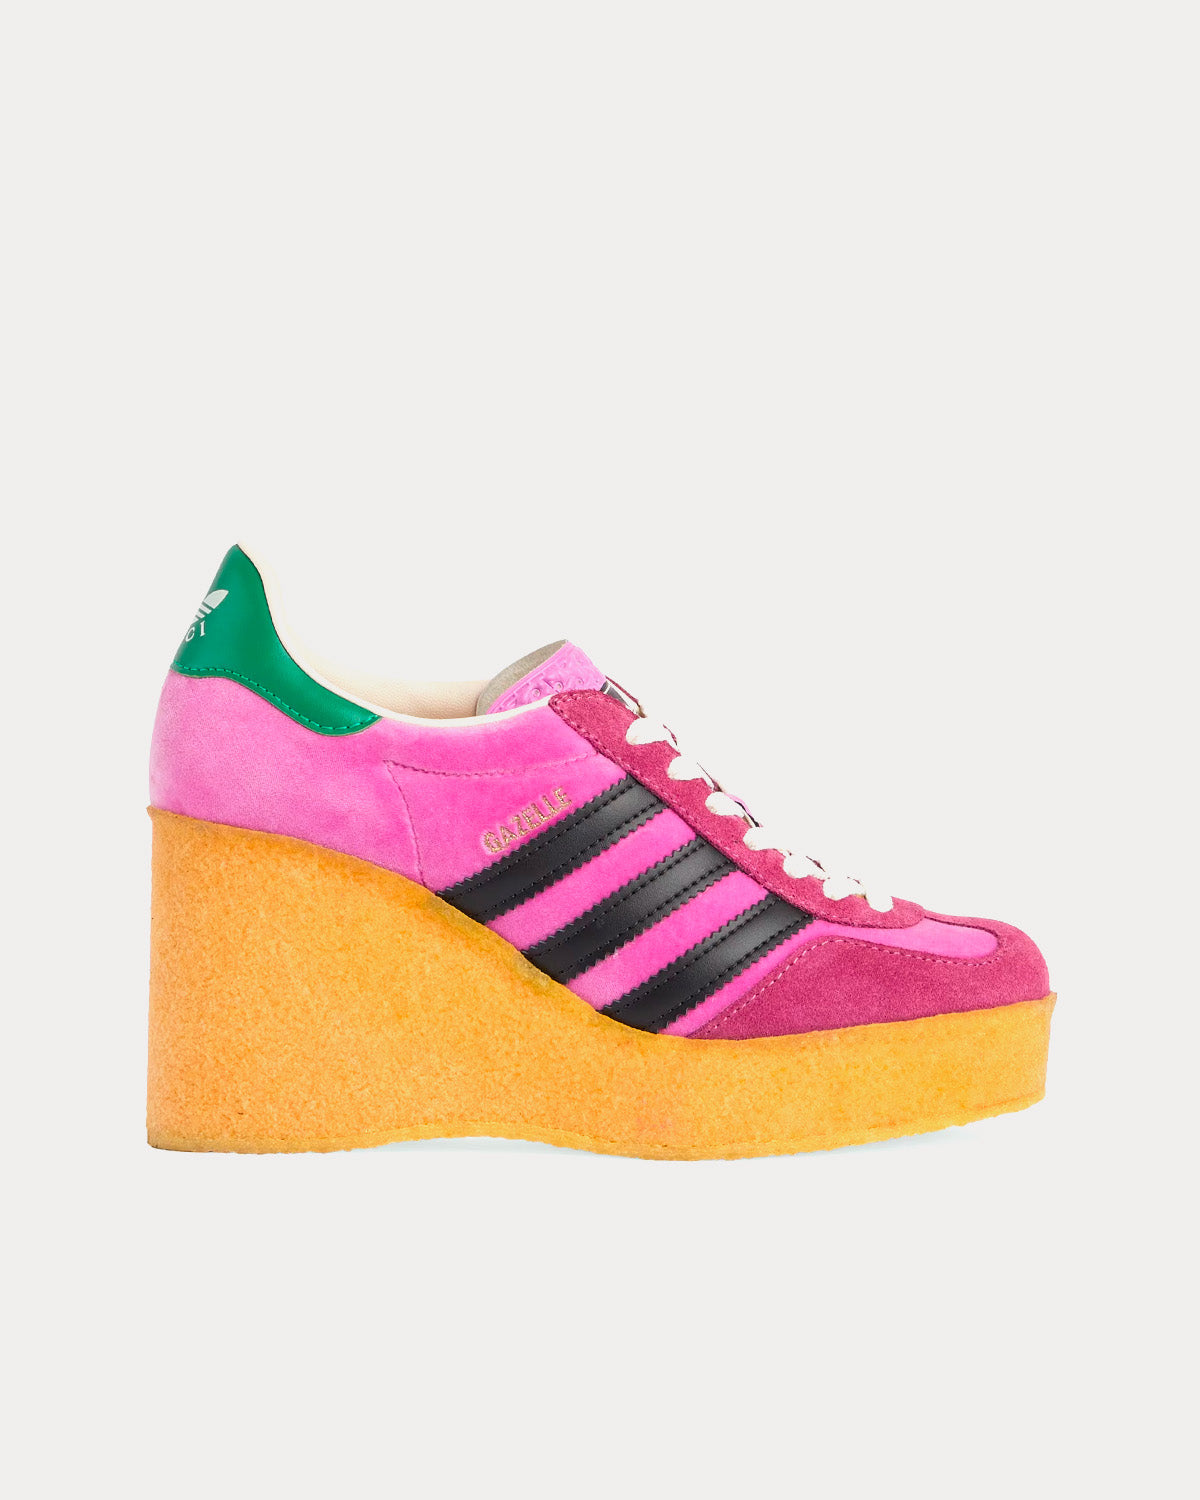 Adidas x Gucci - Gazelle Wedge Pink Velvet Low Top Sneakers